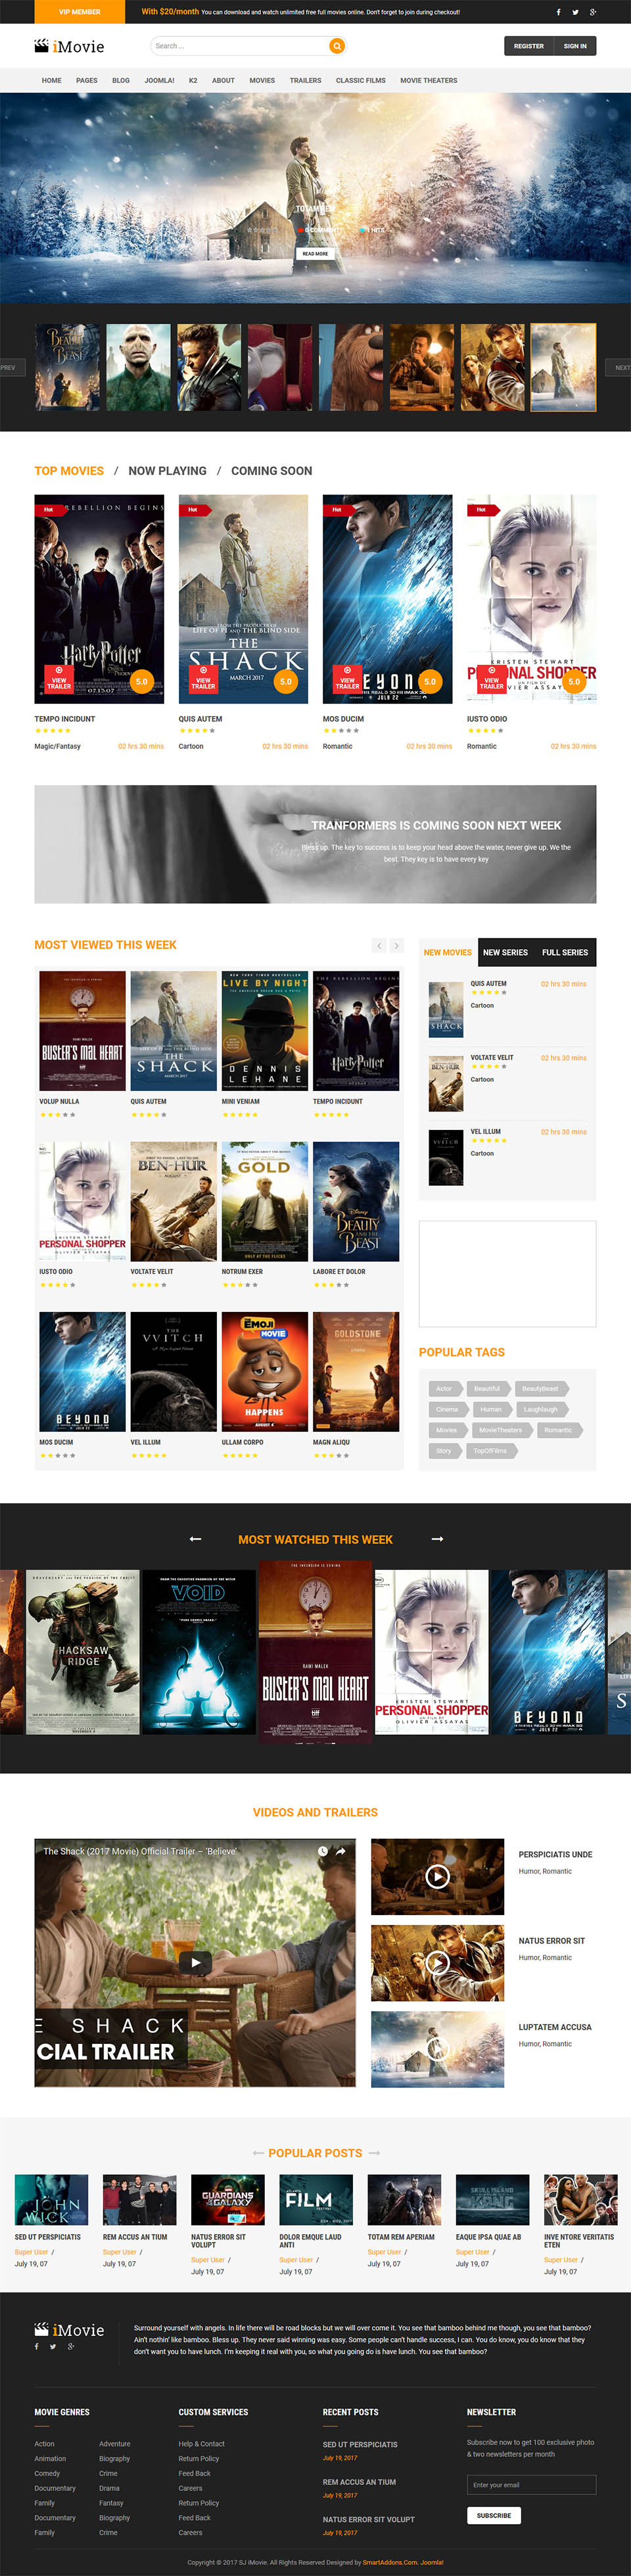 SmartAddons iMovie v3.10 Template movie portal for Joomla